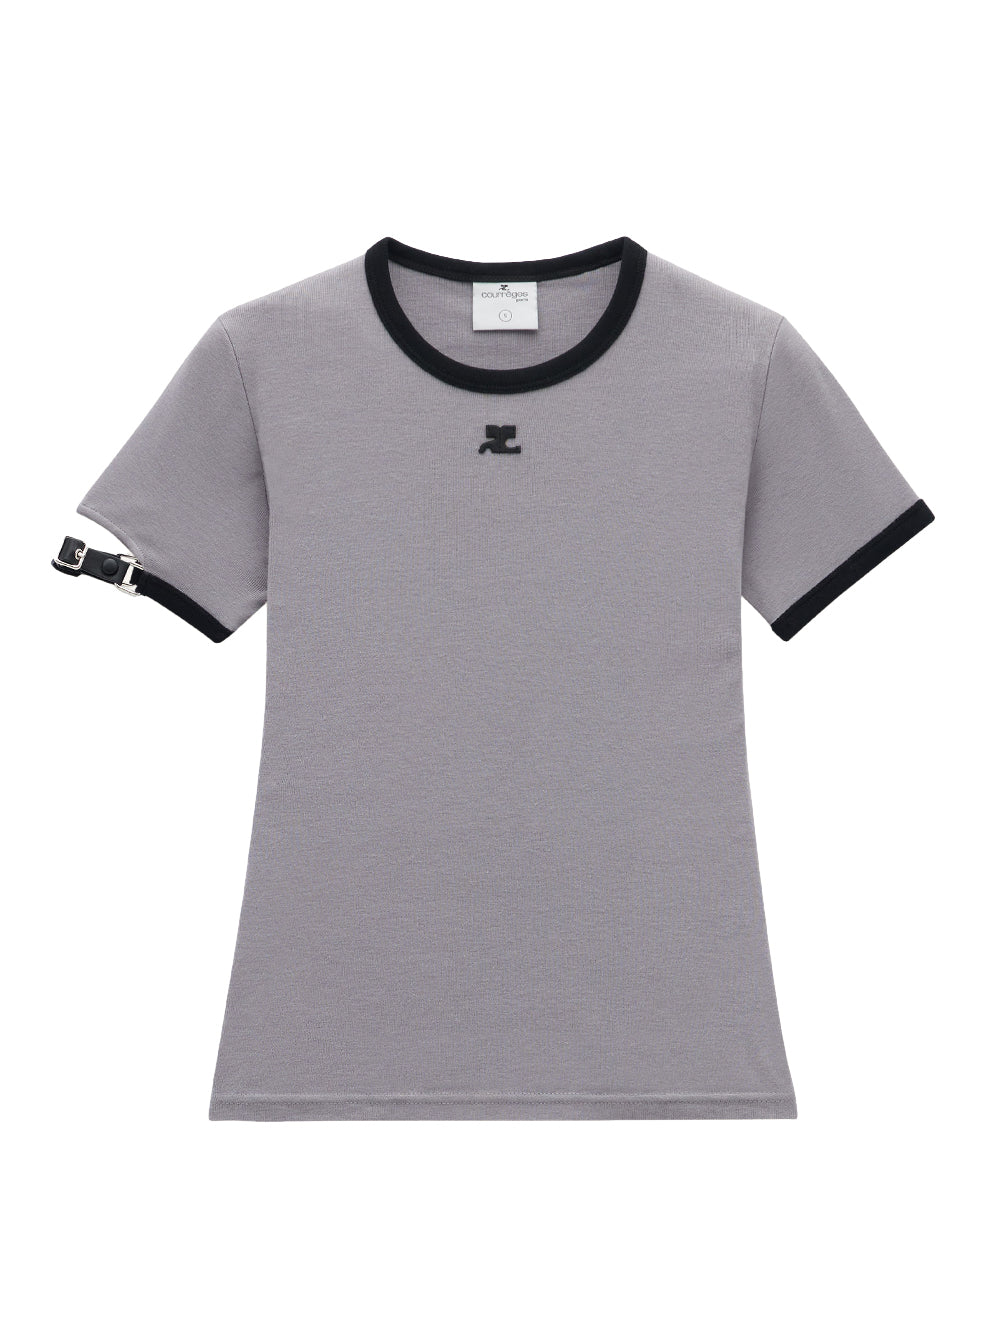 Buckle Contrast T-Shirt (Stonewashed Grey / Black)